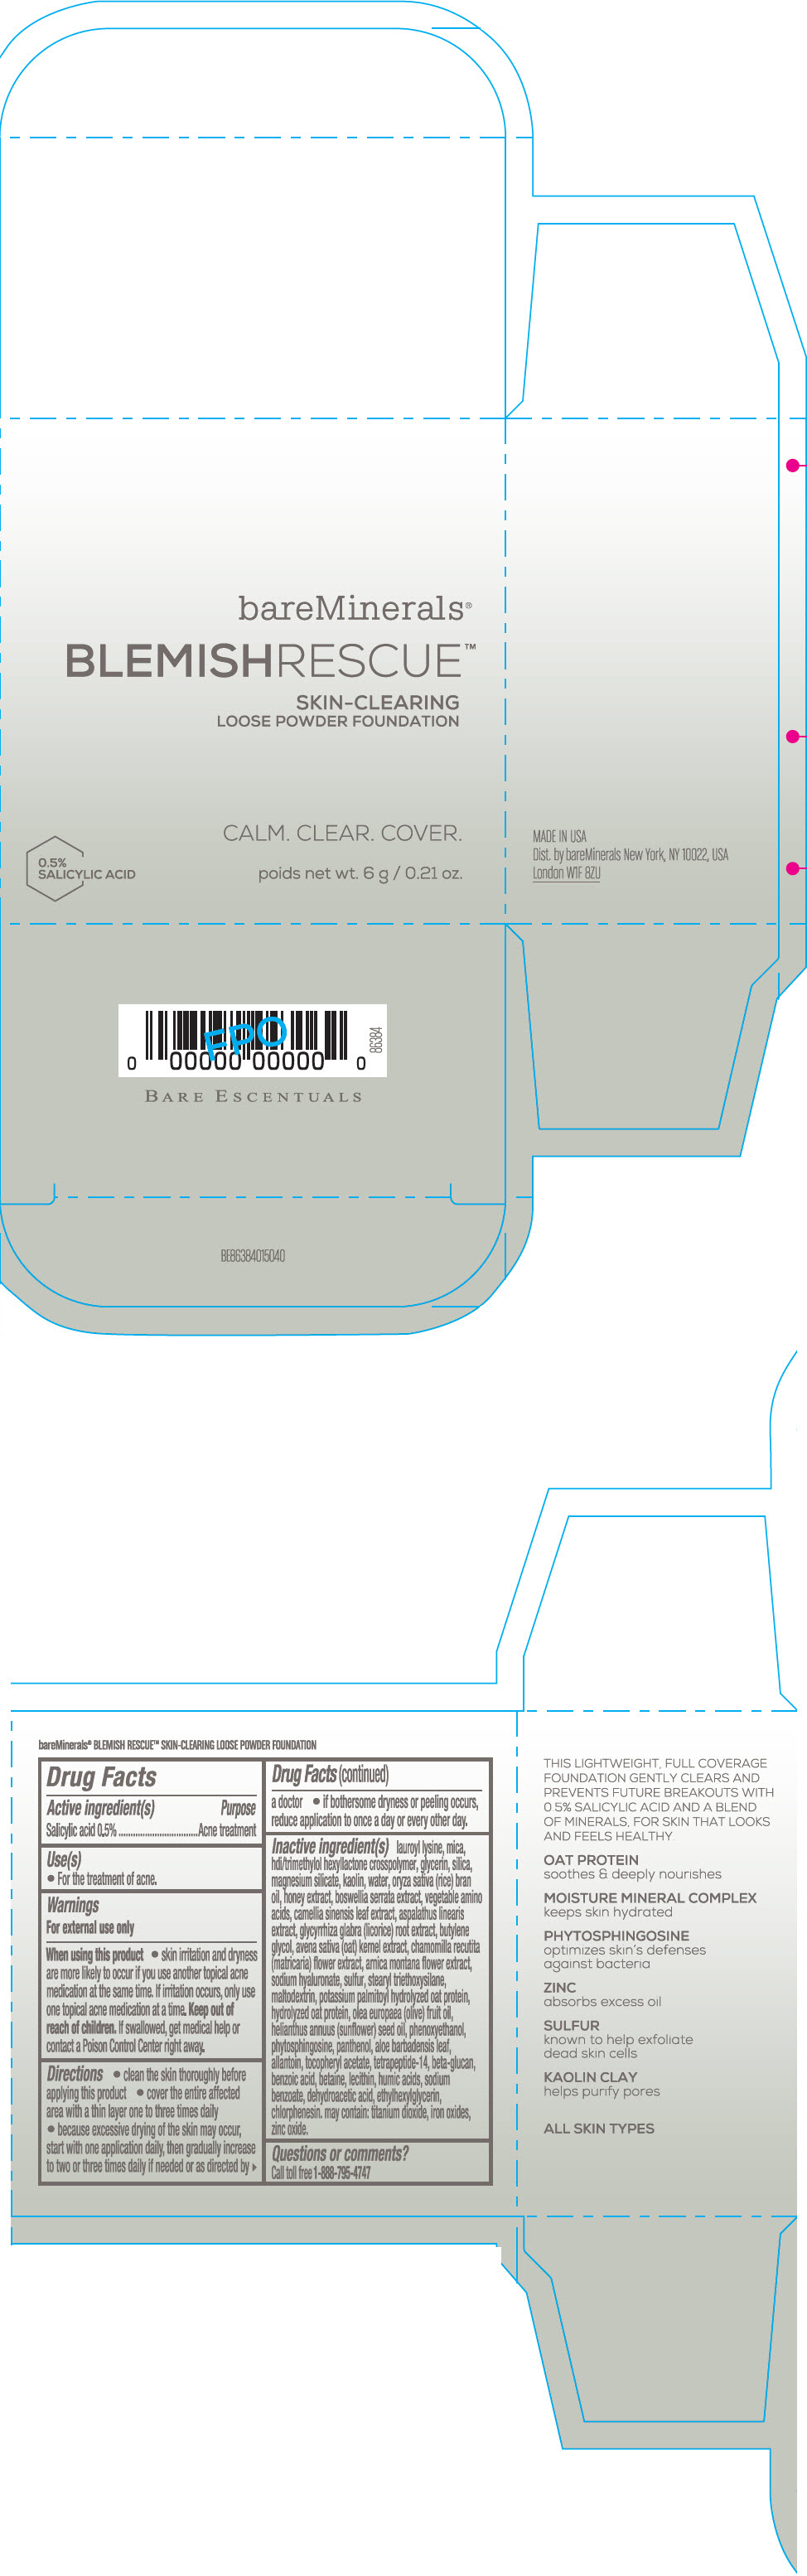 PRINCIPAL DISPLAY PANEL - 6 g Jar Carton - Fairly Medium 1.5C